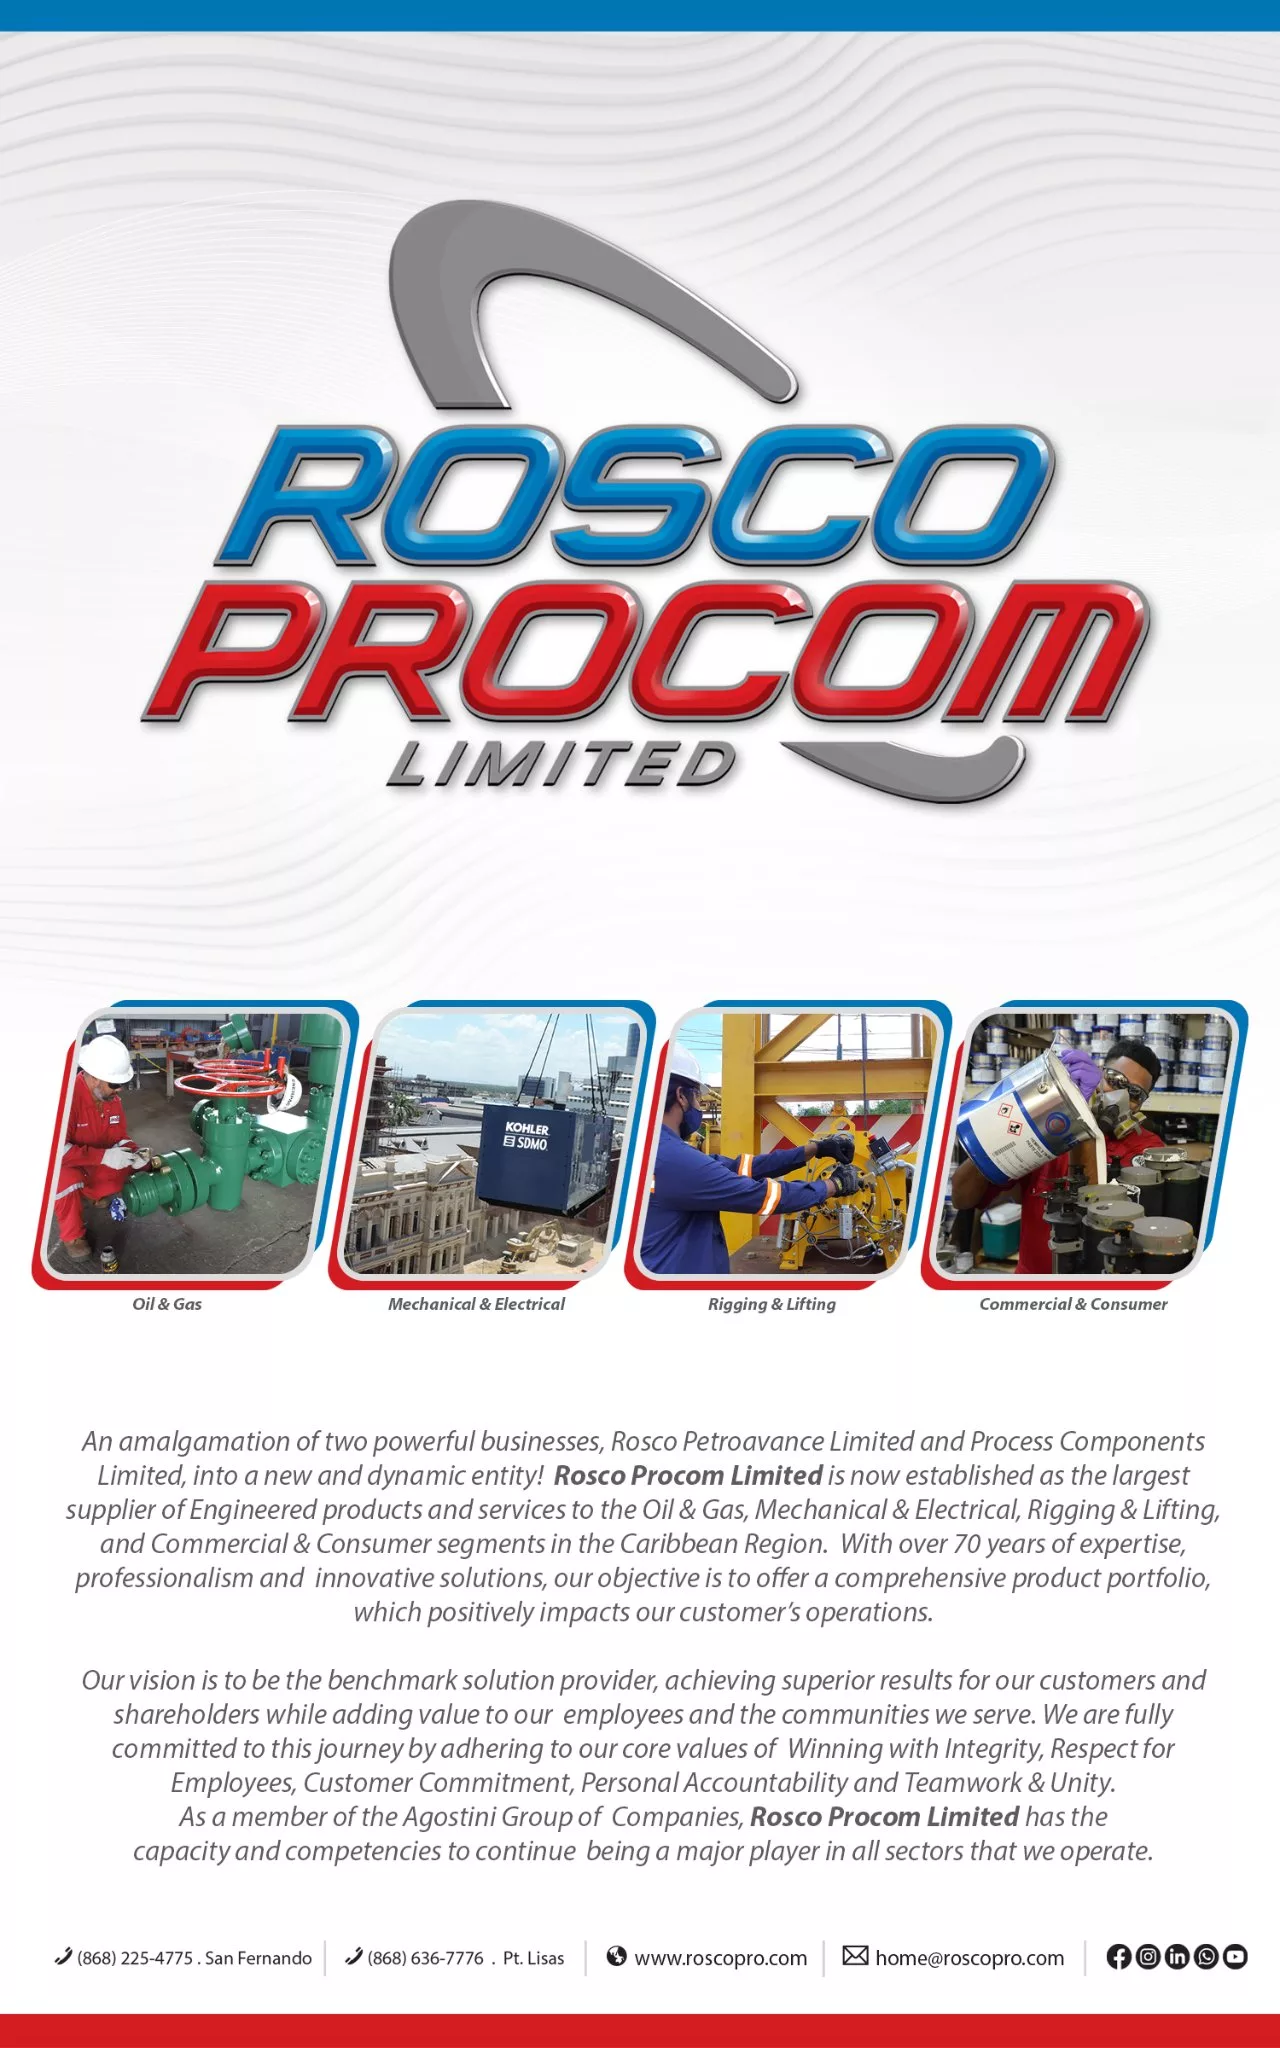 Amalgamation – Rosco Petroavance & Process Components